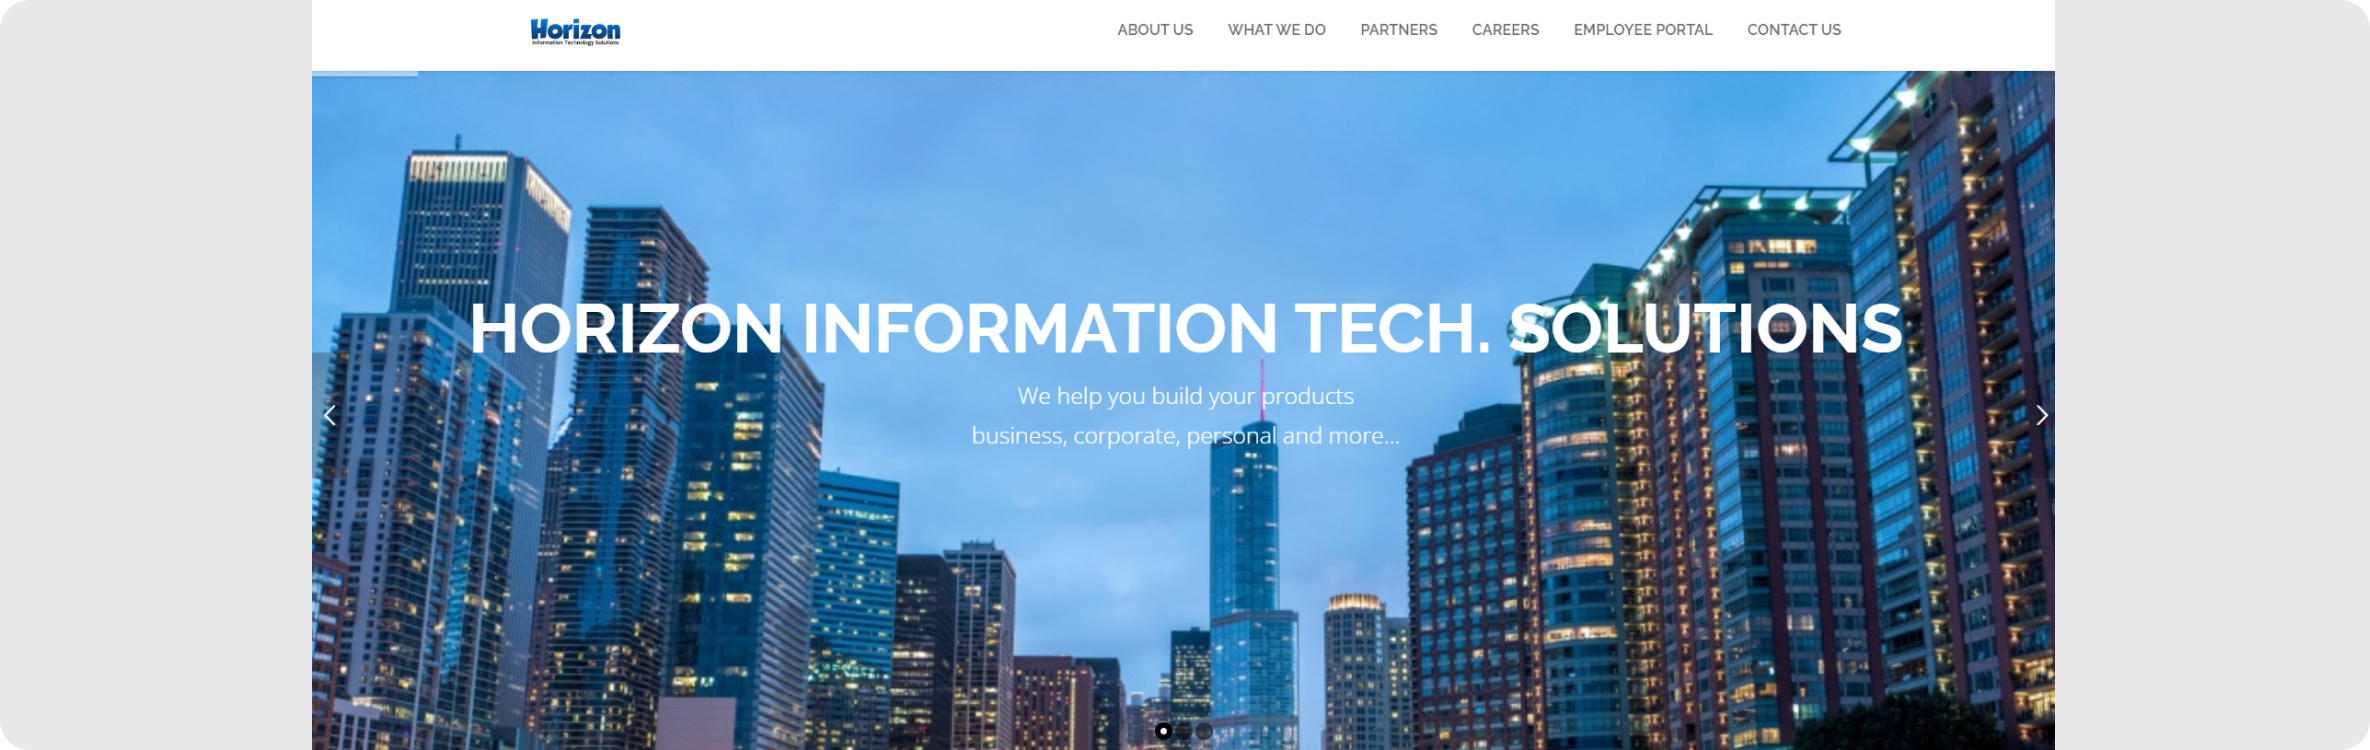 Horizon Information Technology